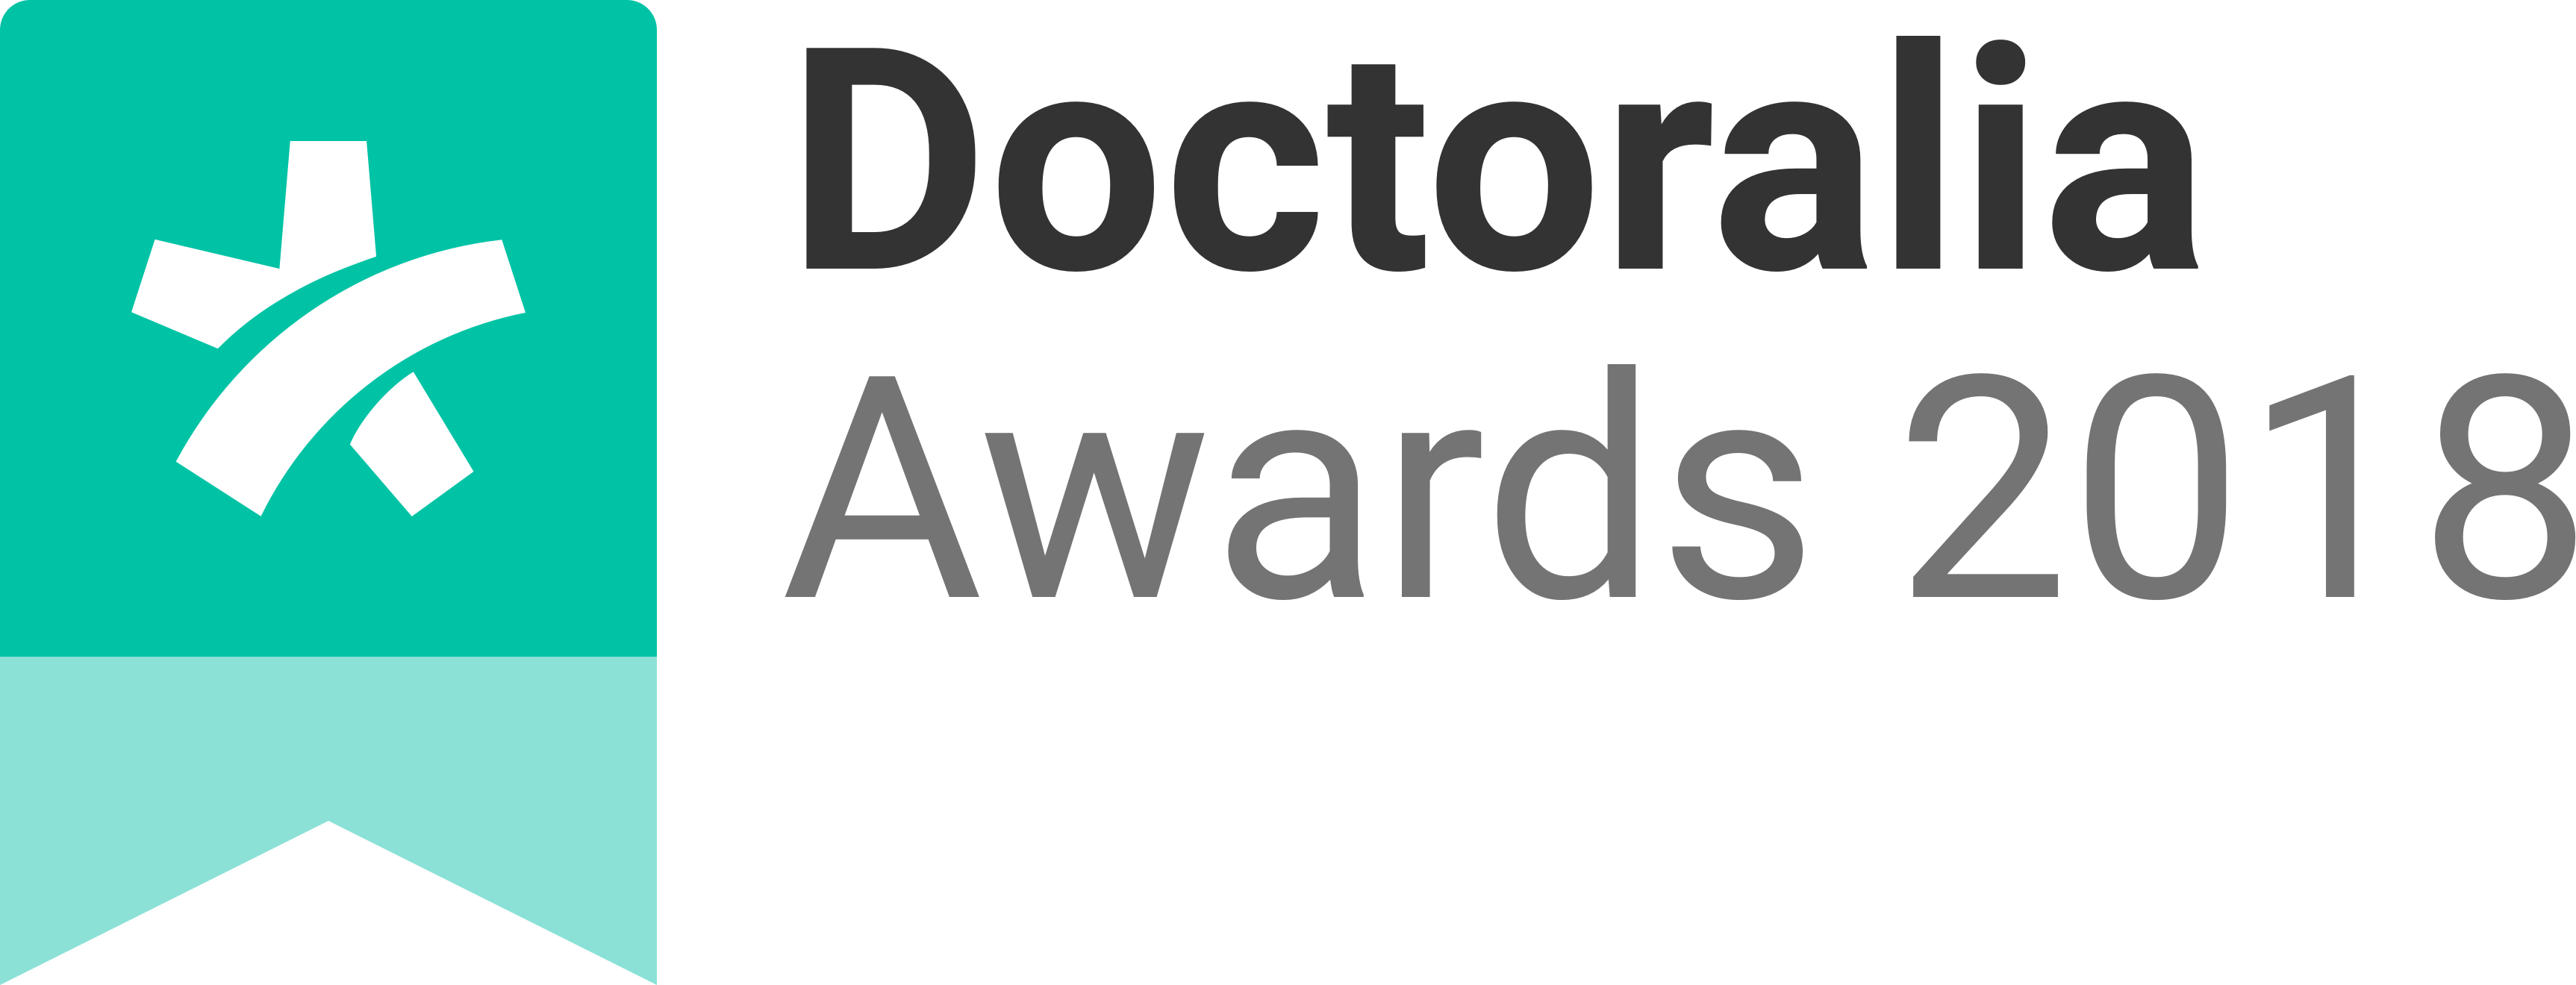 doctoralia-awards-2018-logo-primary-light-bg